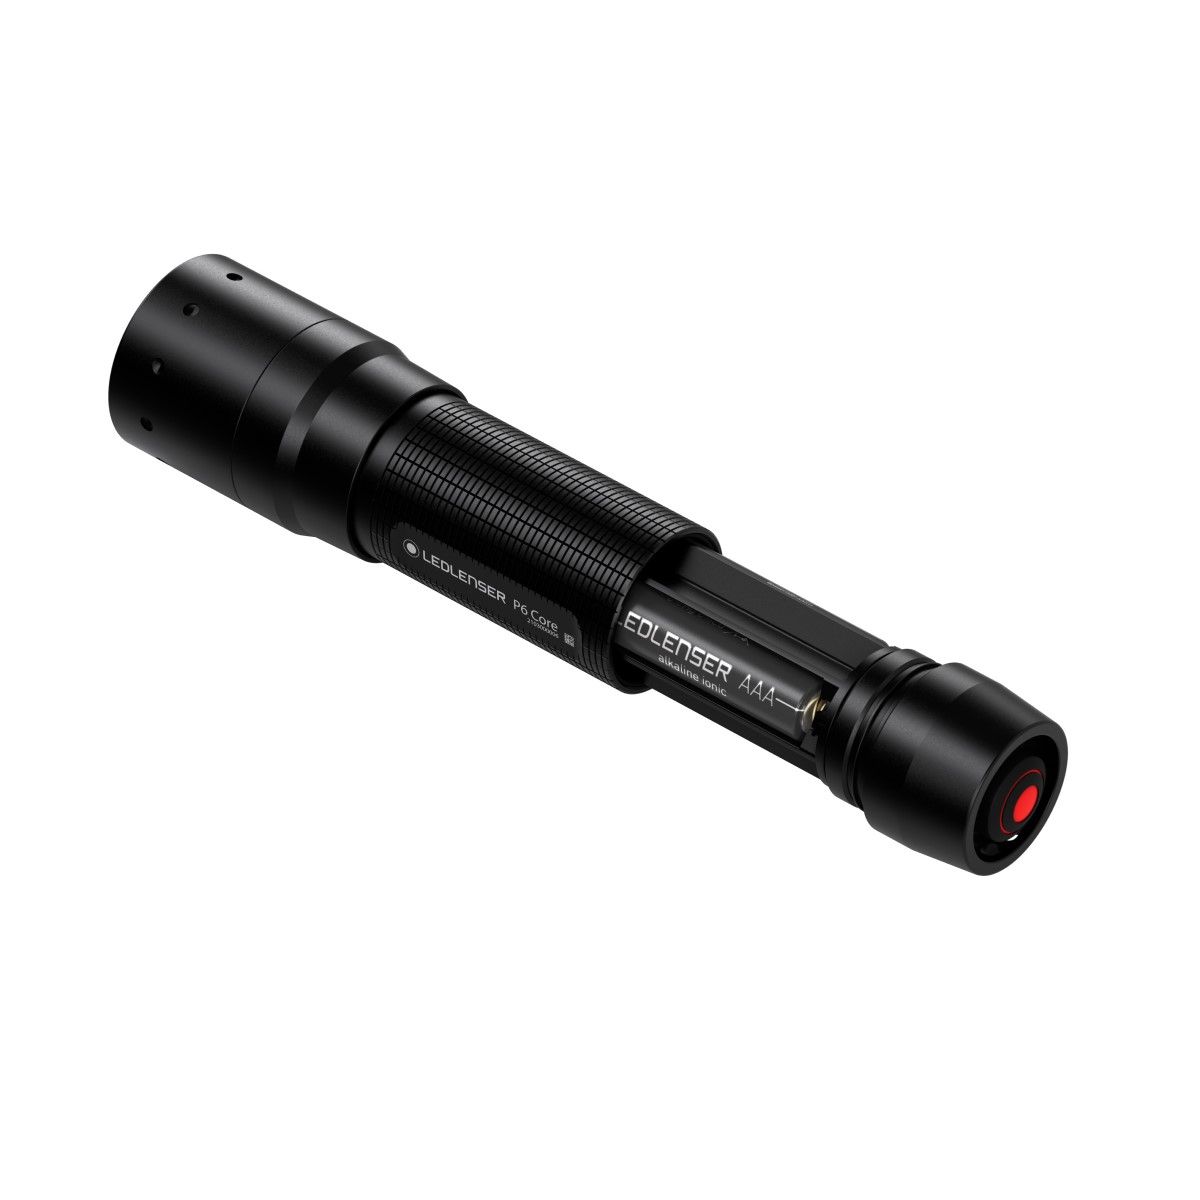 LED Lenser P6 Police Core Torch